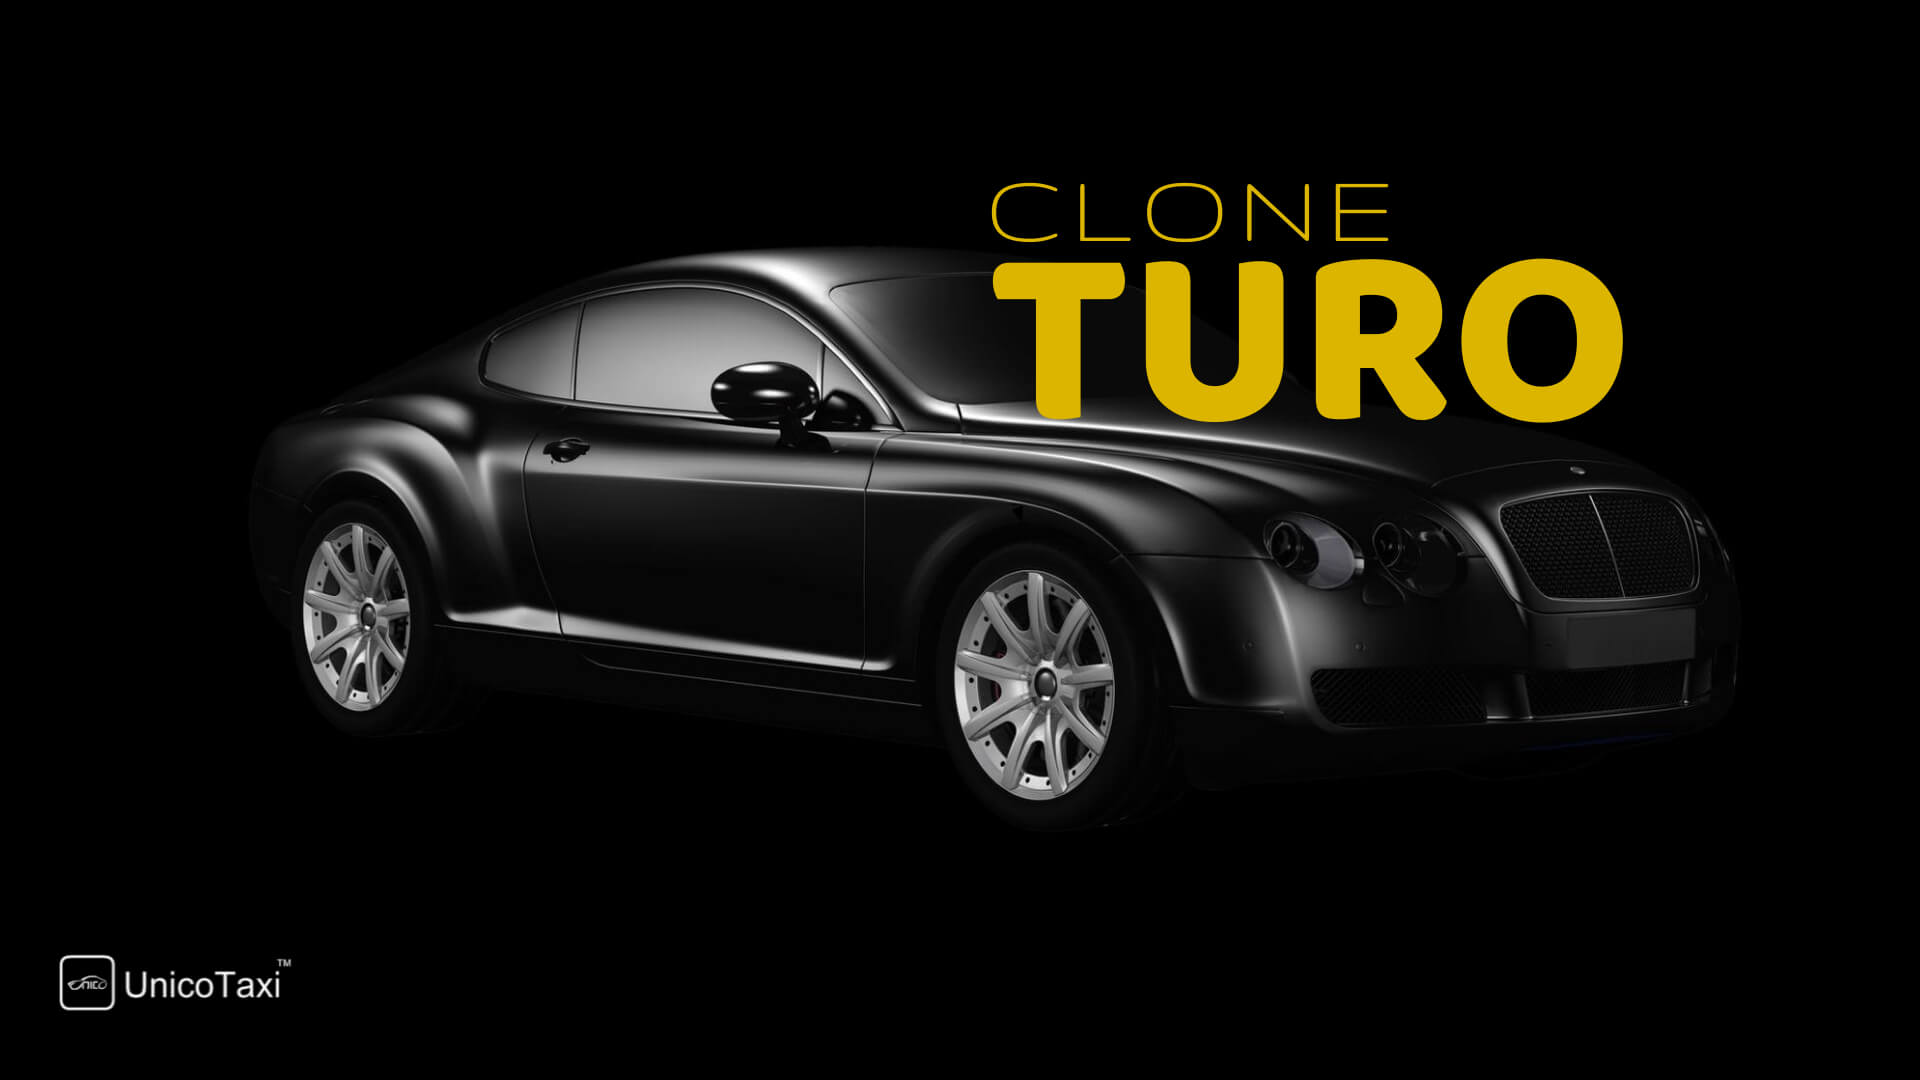 Turo Clone: Are You Ready to Copy Turo Car Rental App in 2022?